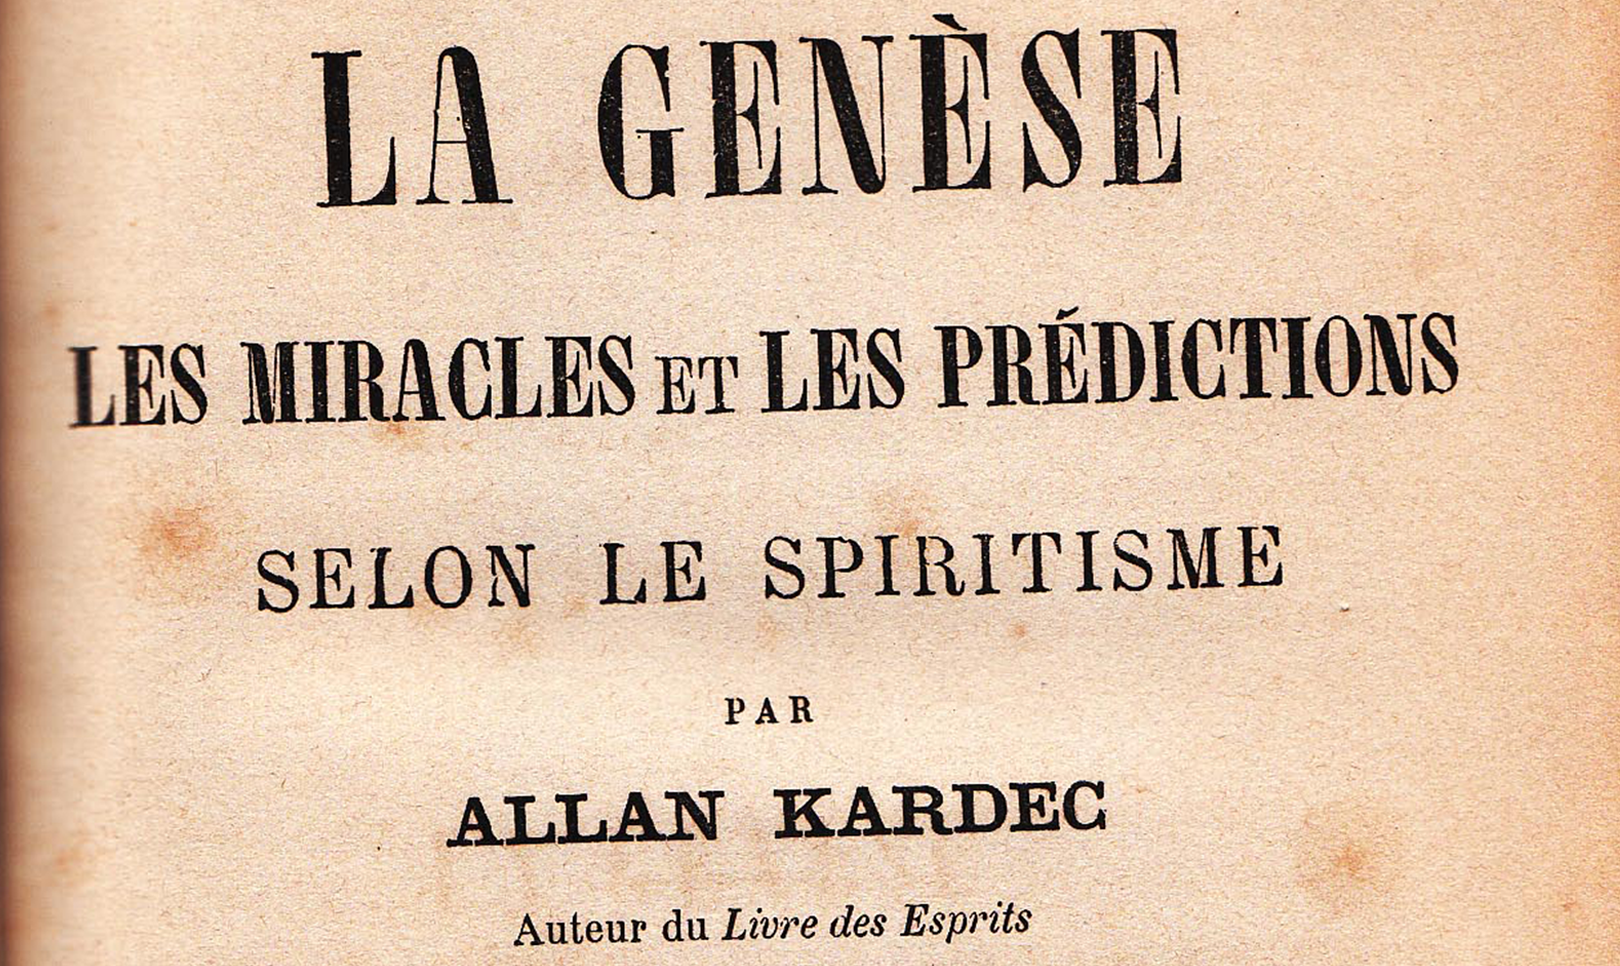 The Genesis, by Allan Kardec